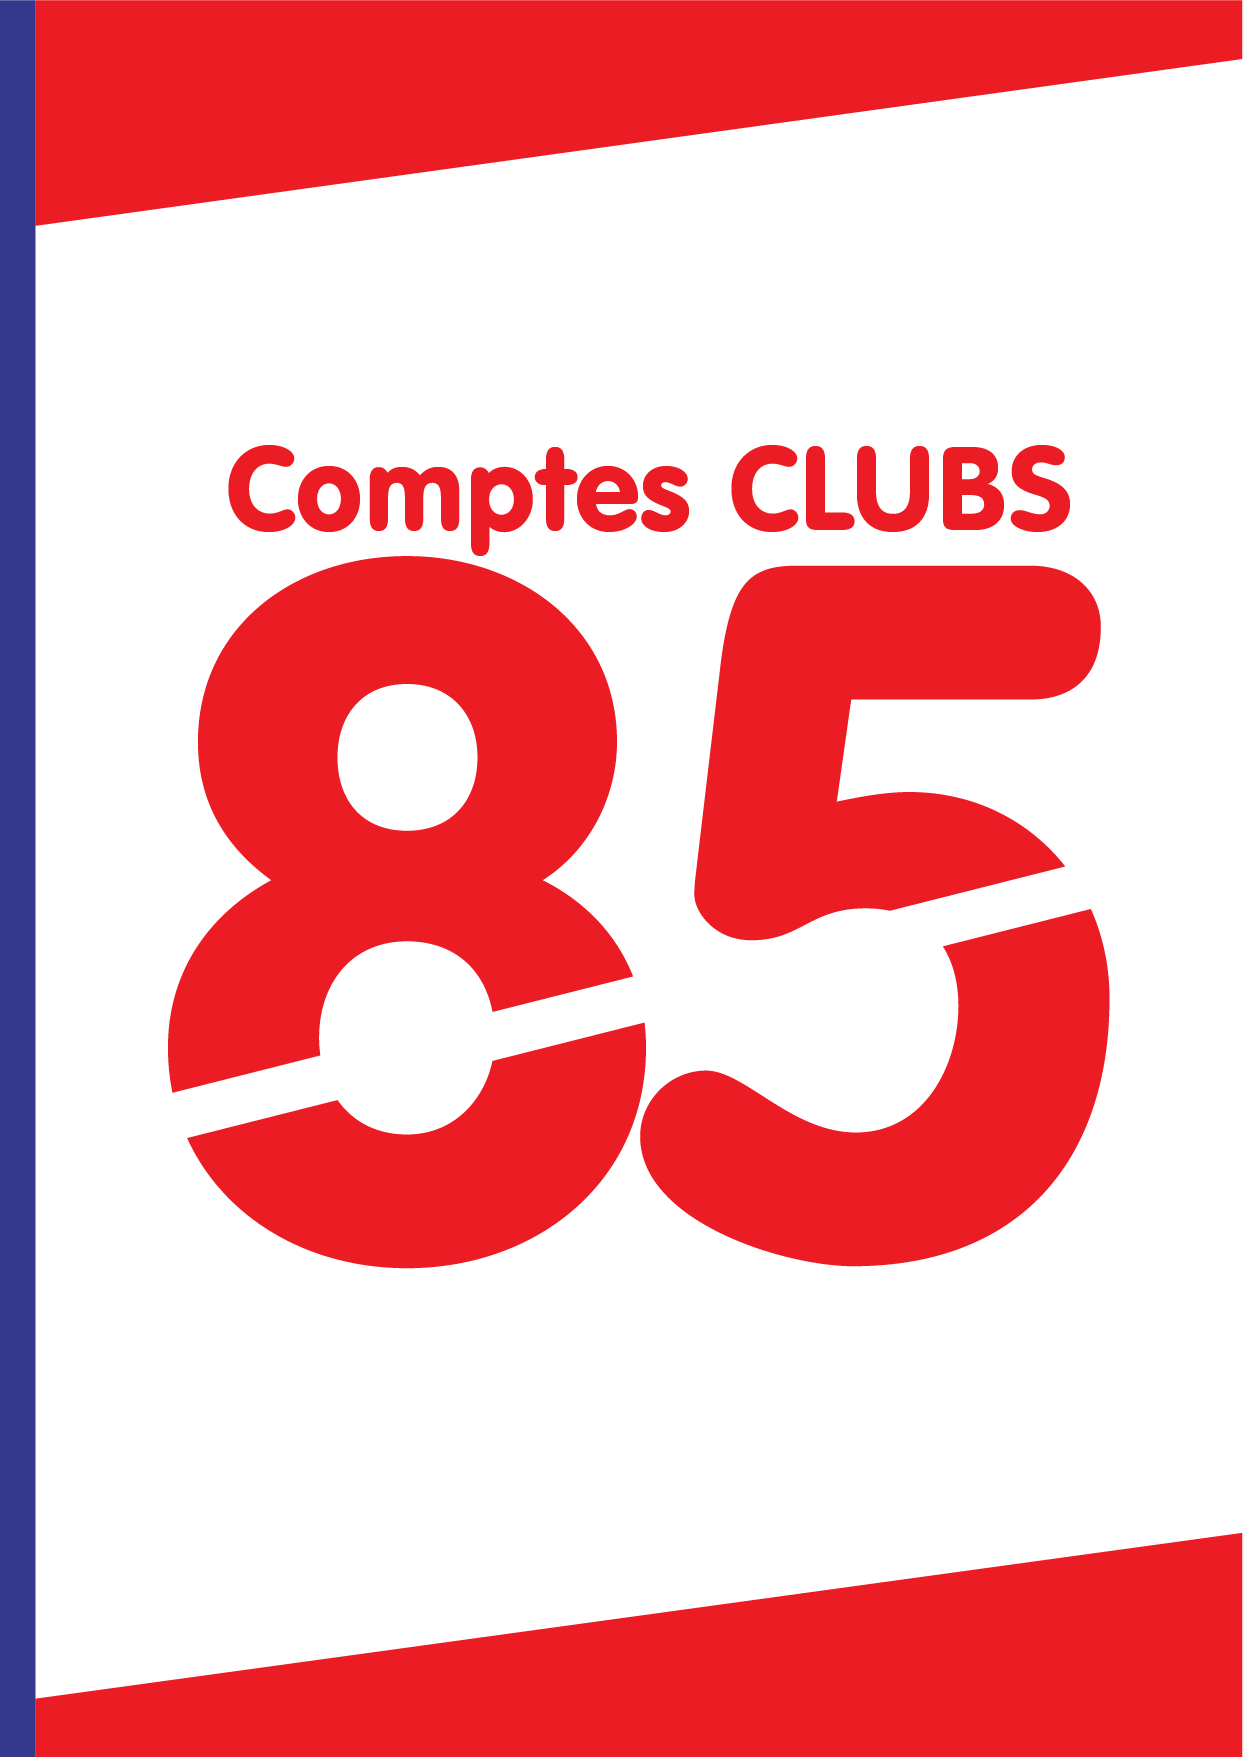 Comptes CLUBS 85